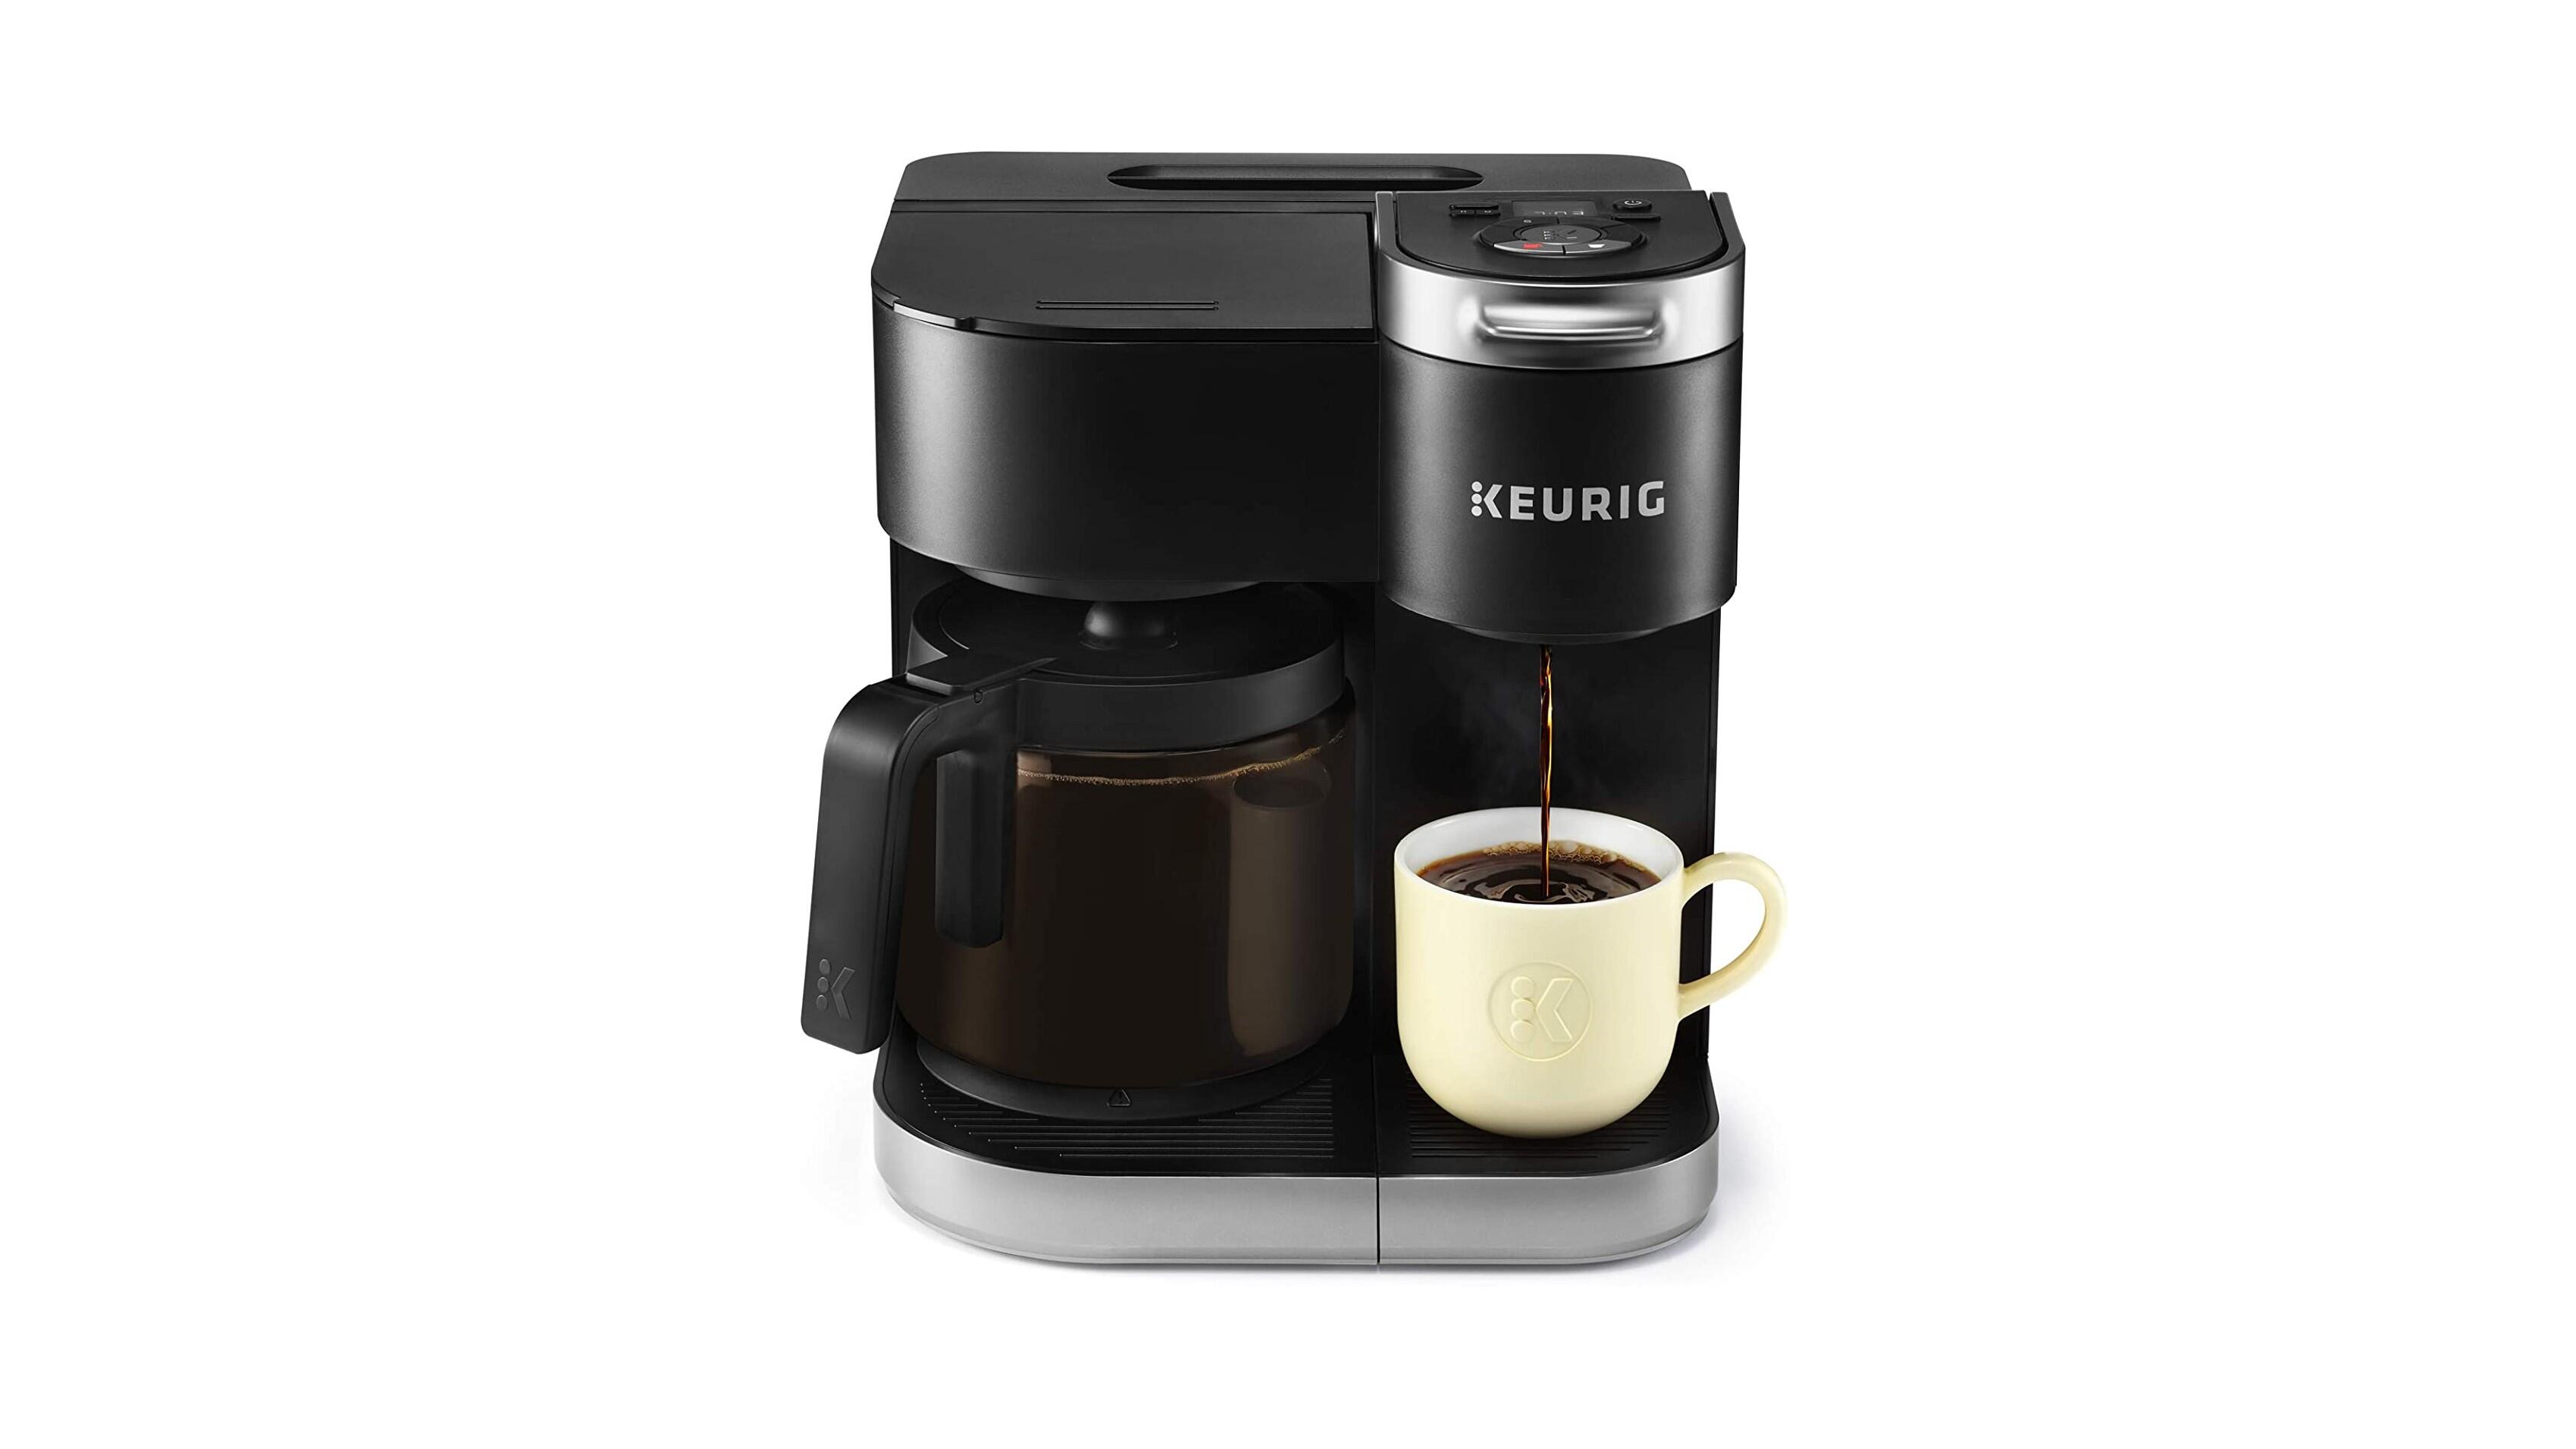 Best coffee maker deal: The Keurig K-Duo Essentials is $20 off